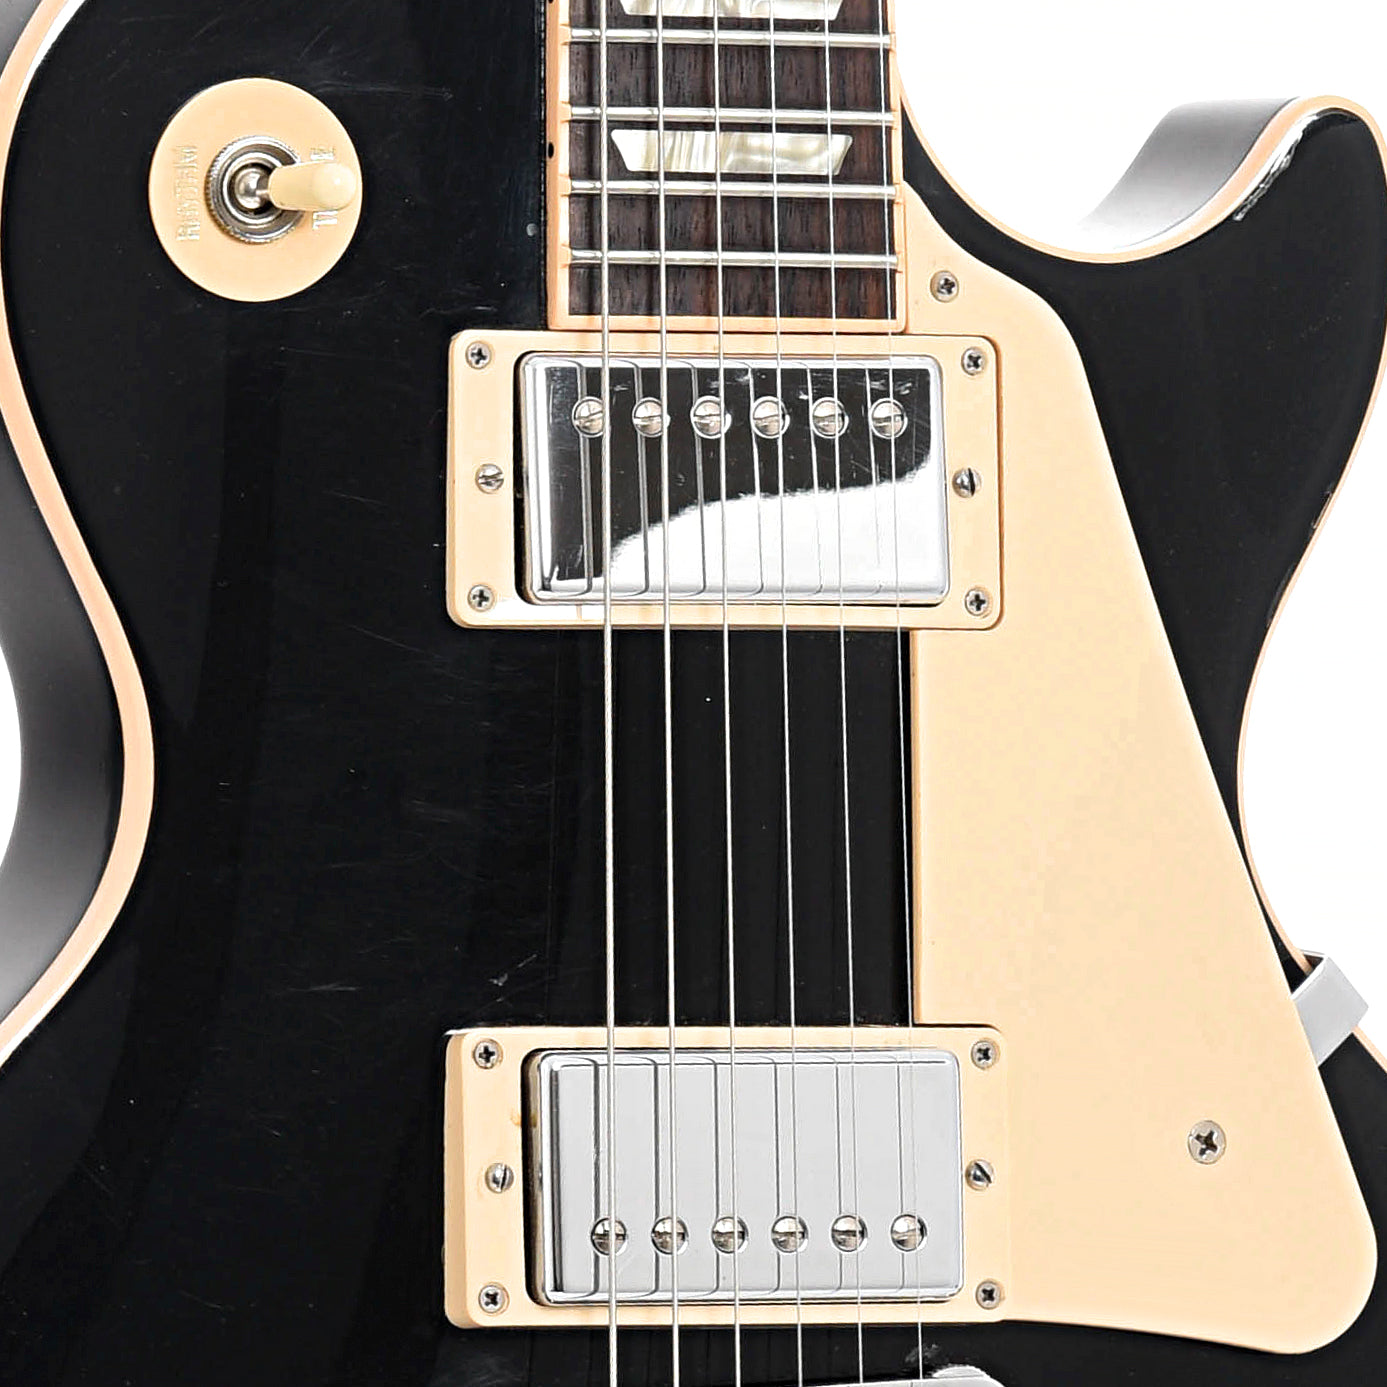 Pickups of Gibson Les Paul Standard 